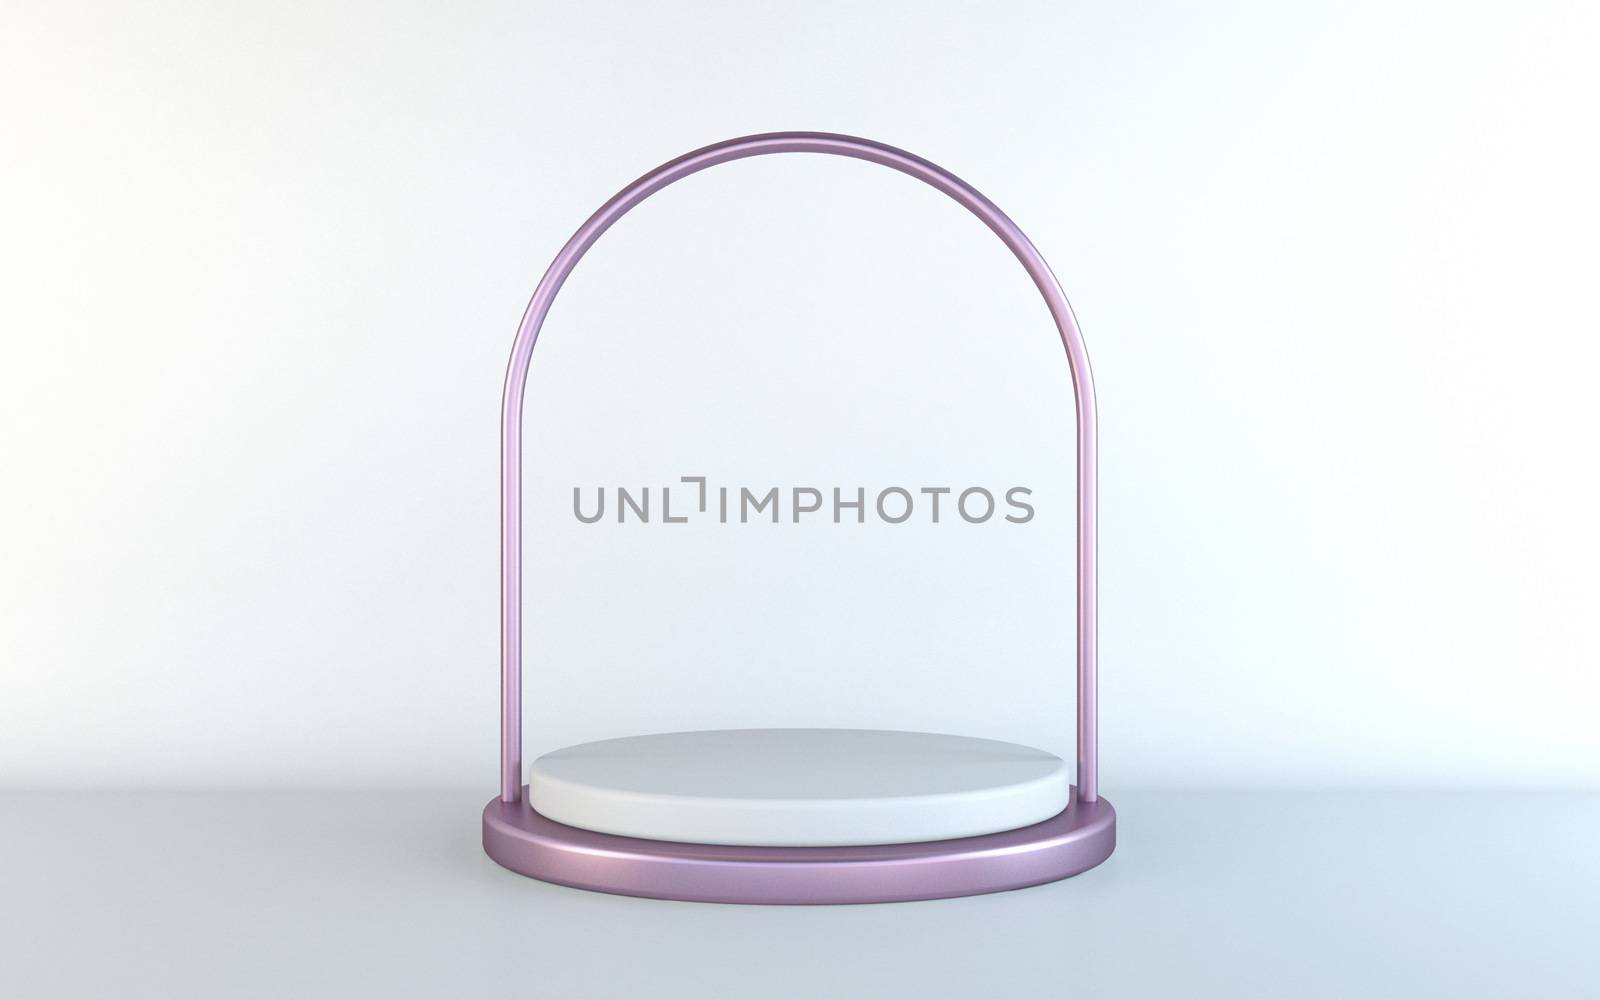 Minimal podium abstract shape 3D render illustration